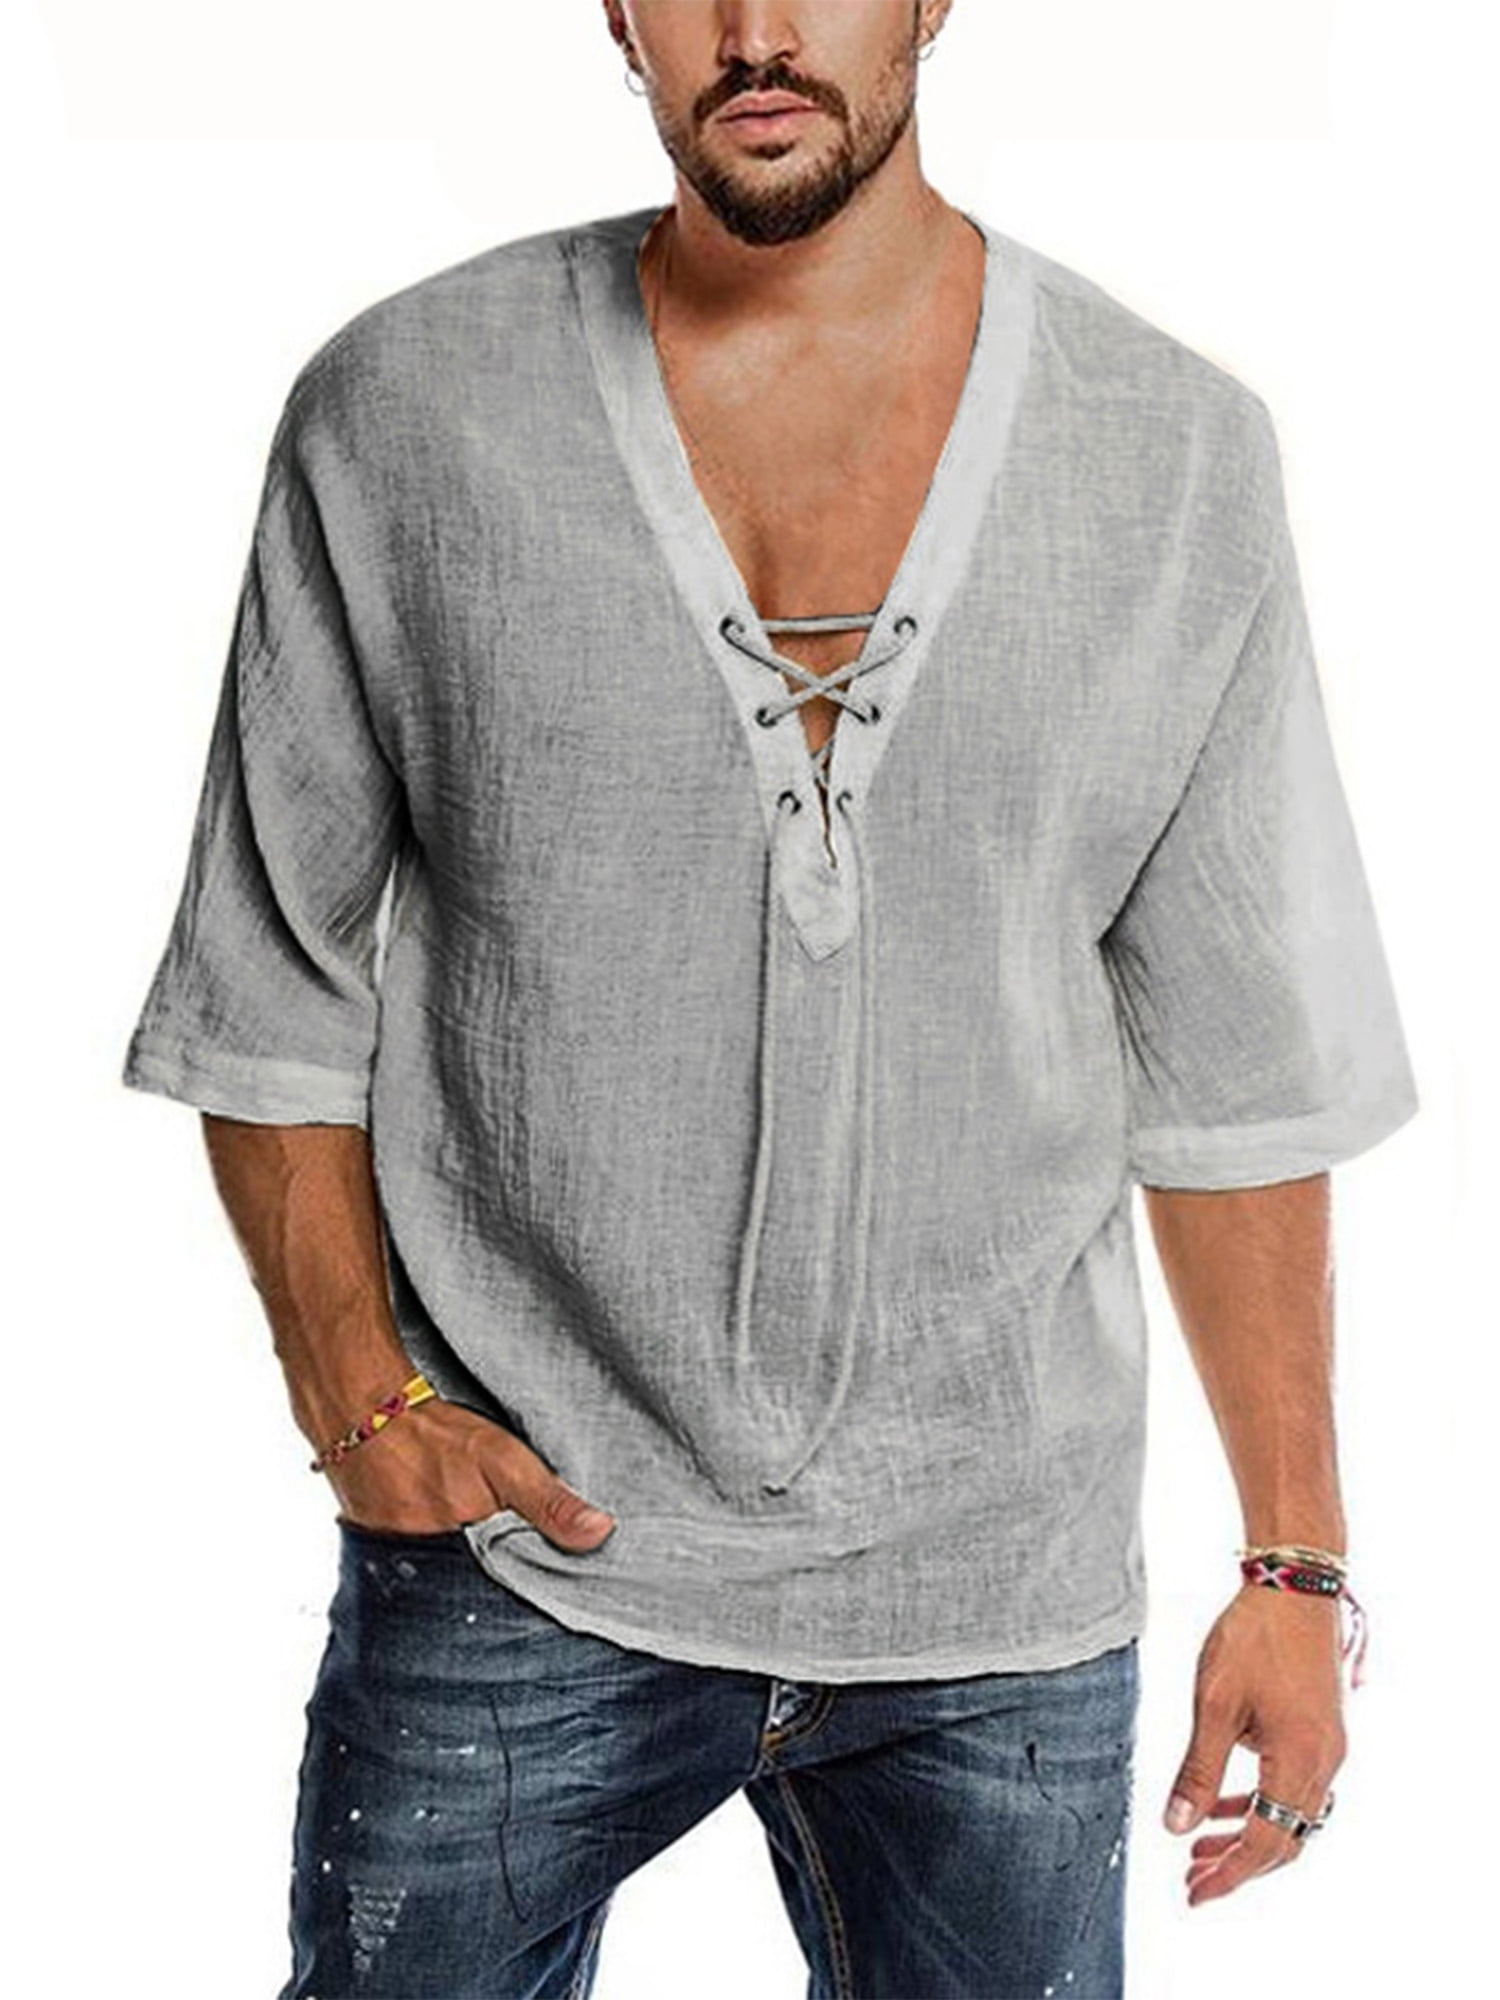 Summer Mens Retro Hippy V Neck Shirt Striped Short Sleeve Casual Tops Tee Blouse 